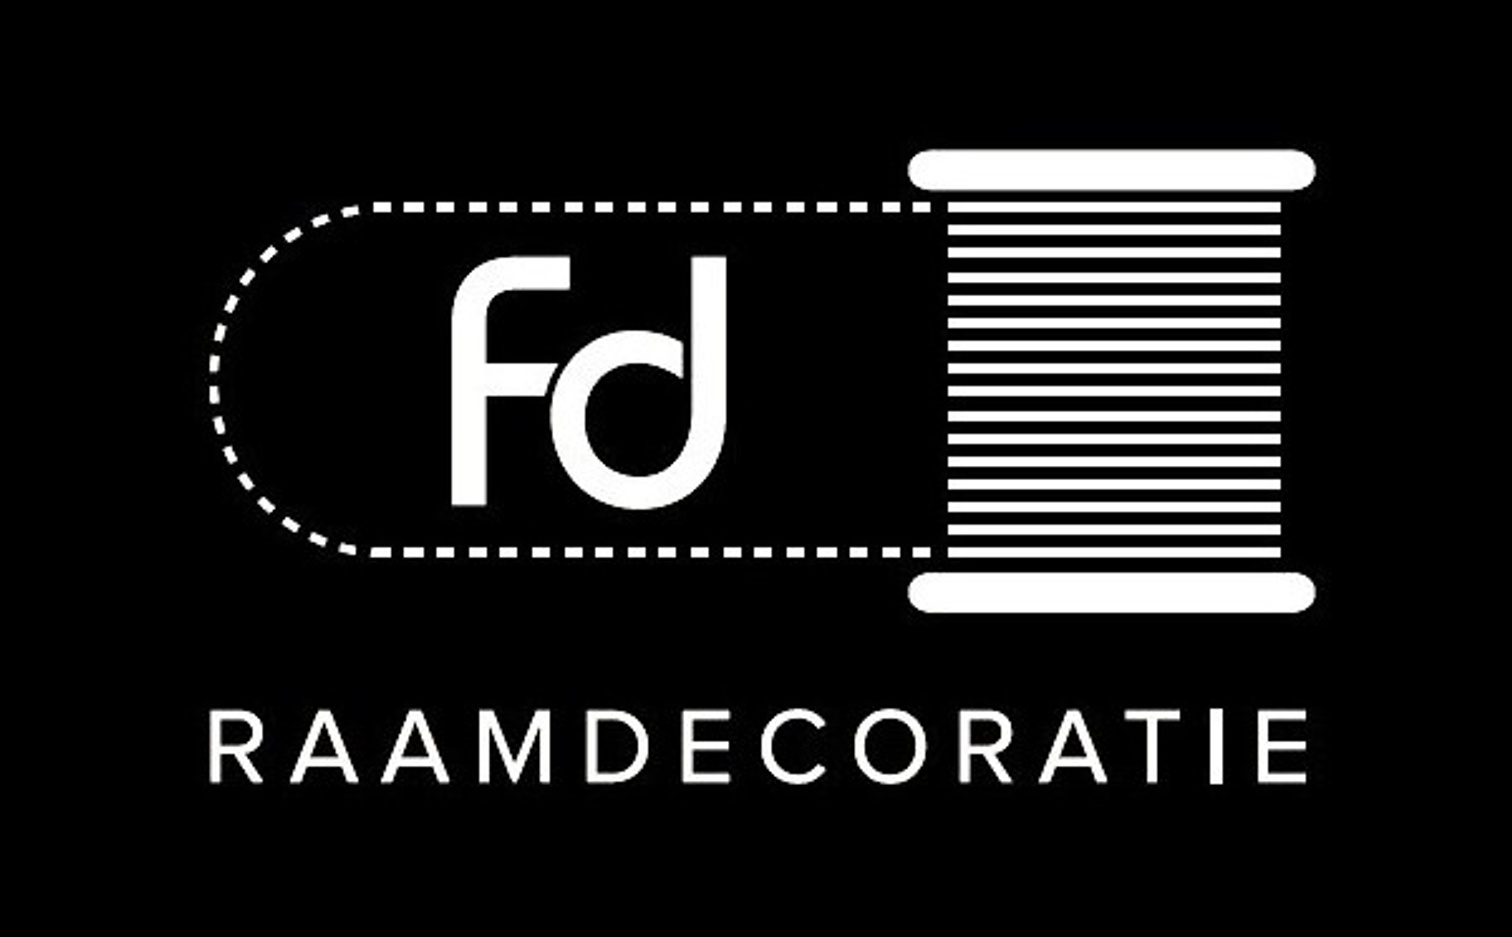 Raamdecoratie FD logo